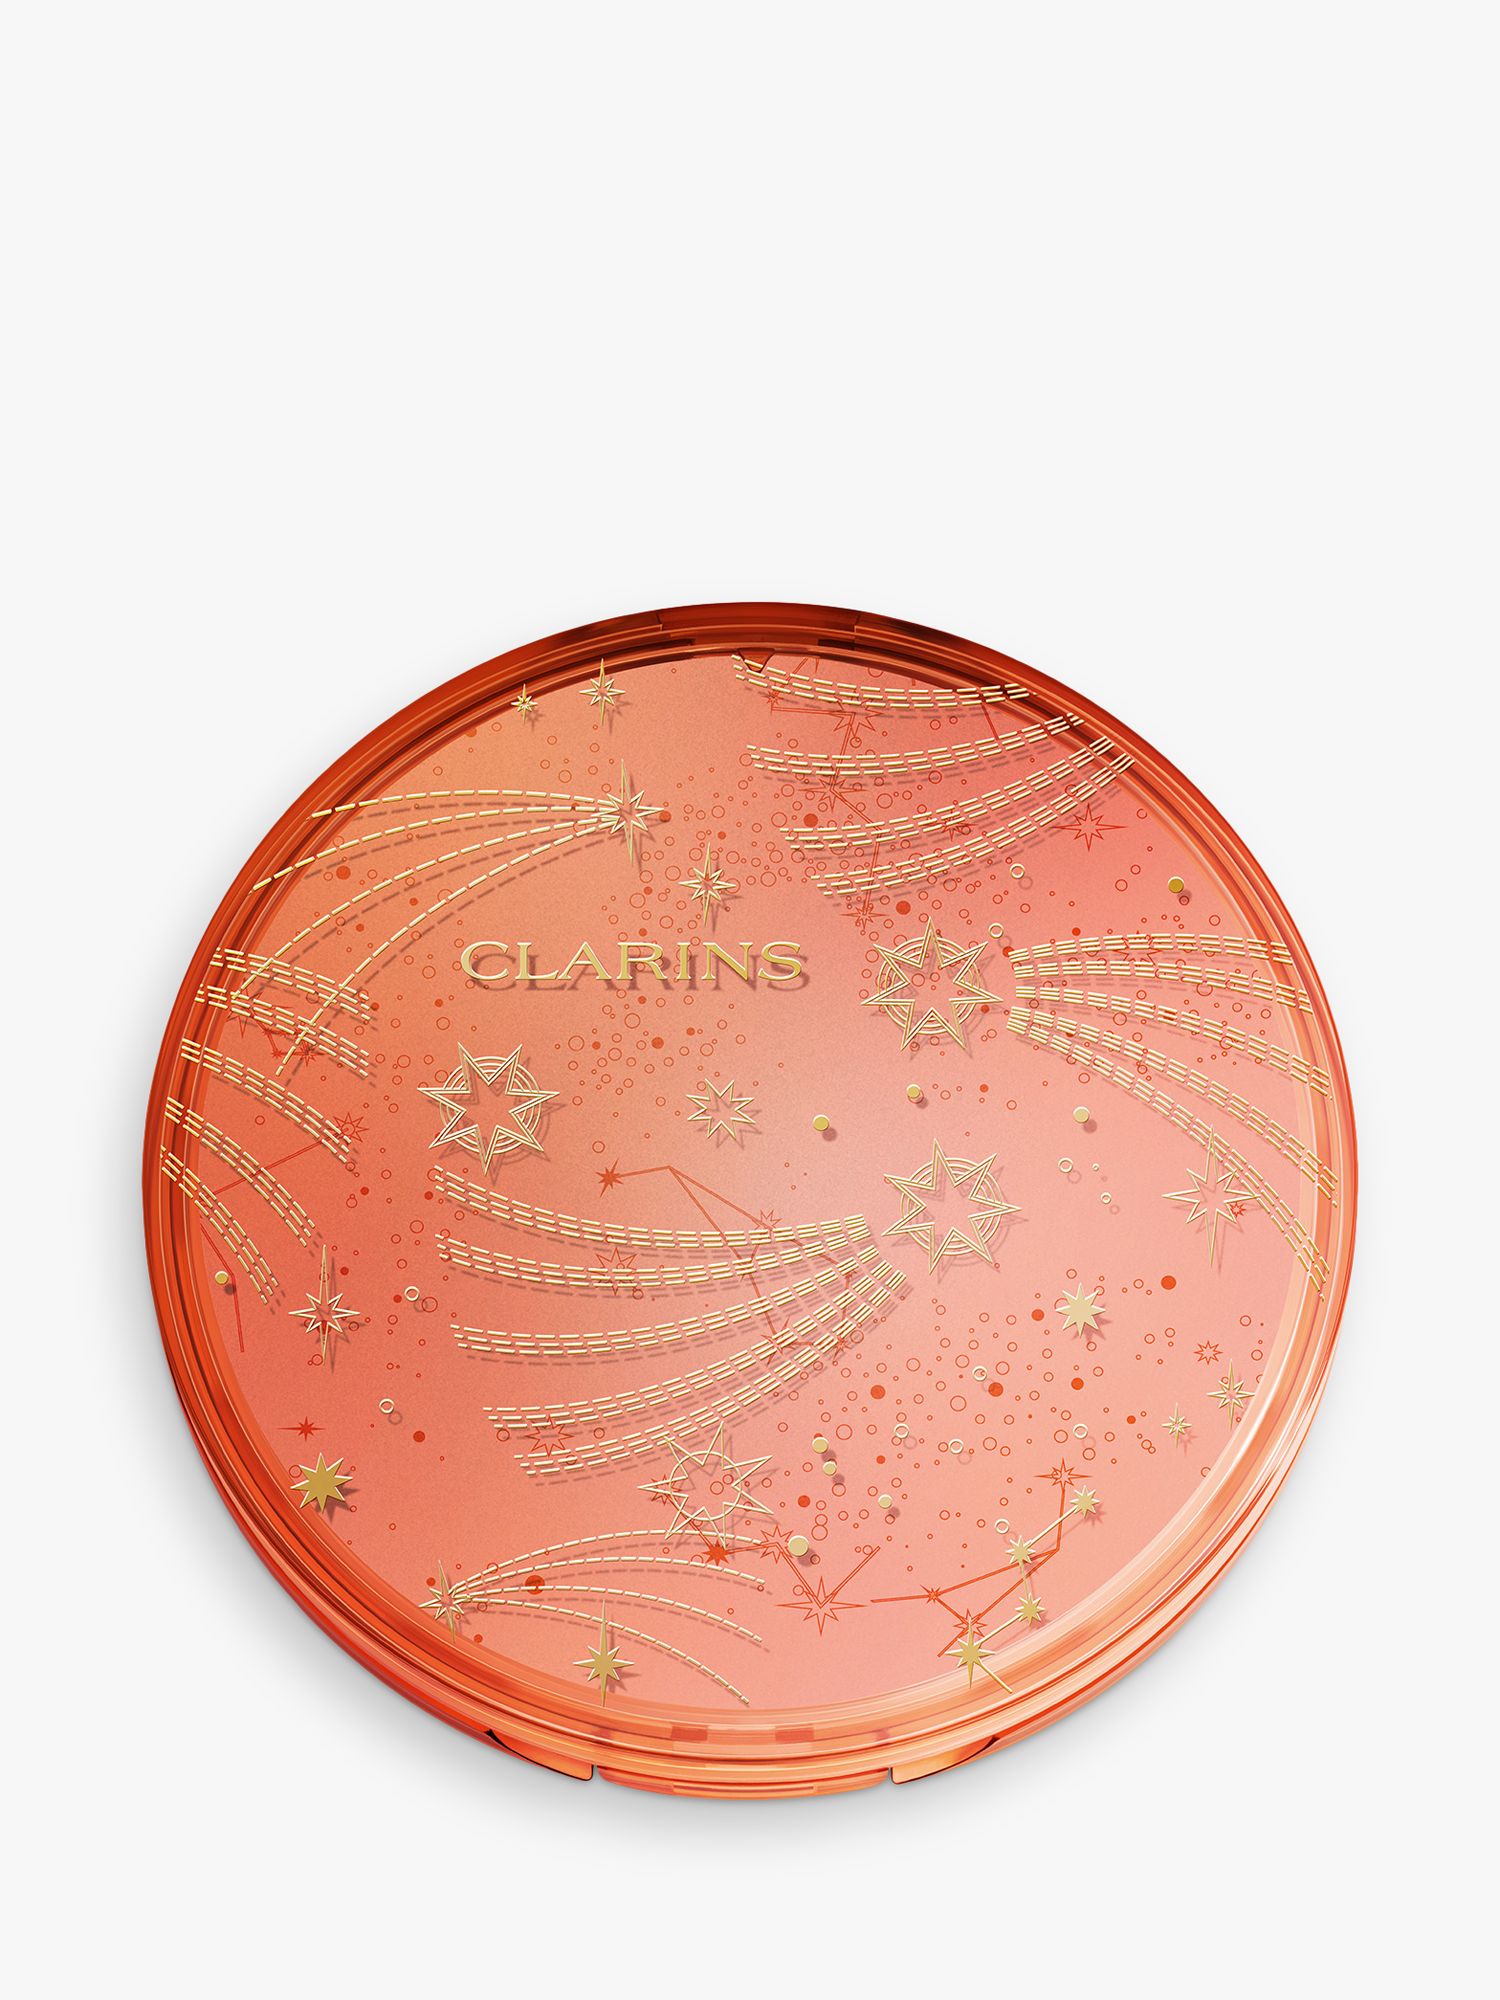 Clarins Limited Edition Jumbo Bronzing Powder, 19g 2